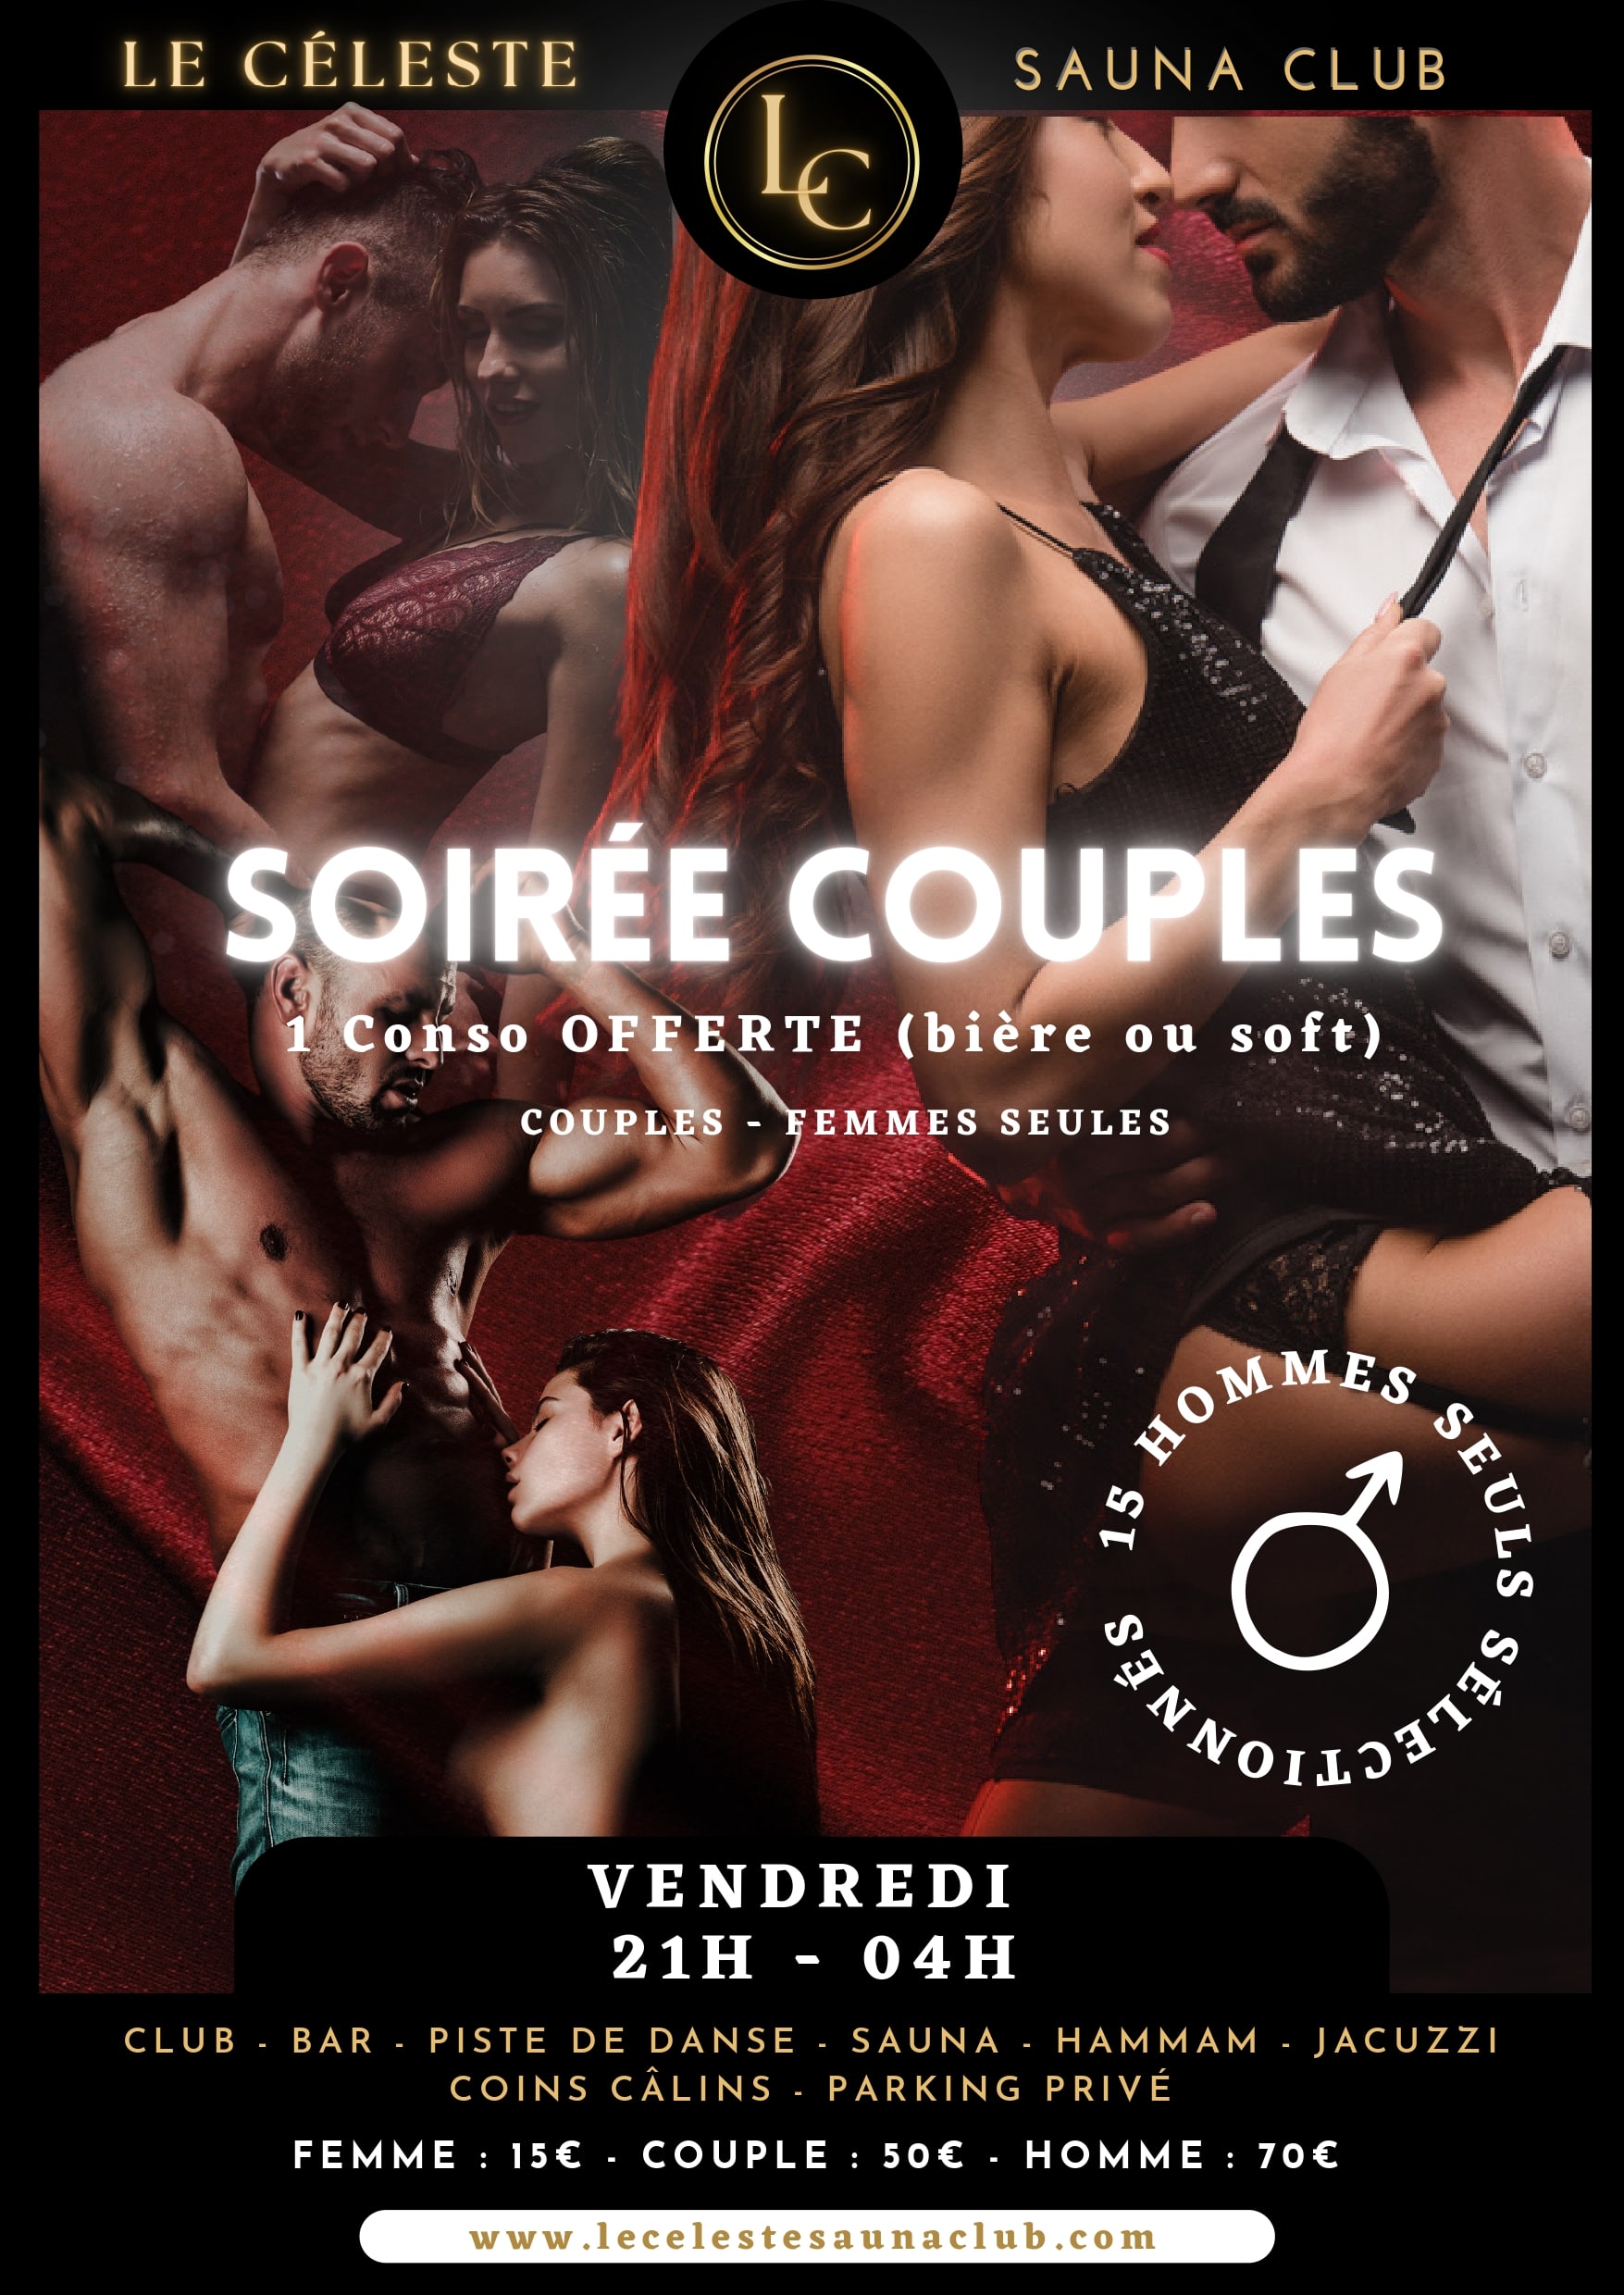 VENDREDI SOIREE COUPLE - 15 HOMMES